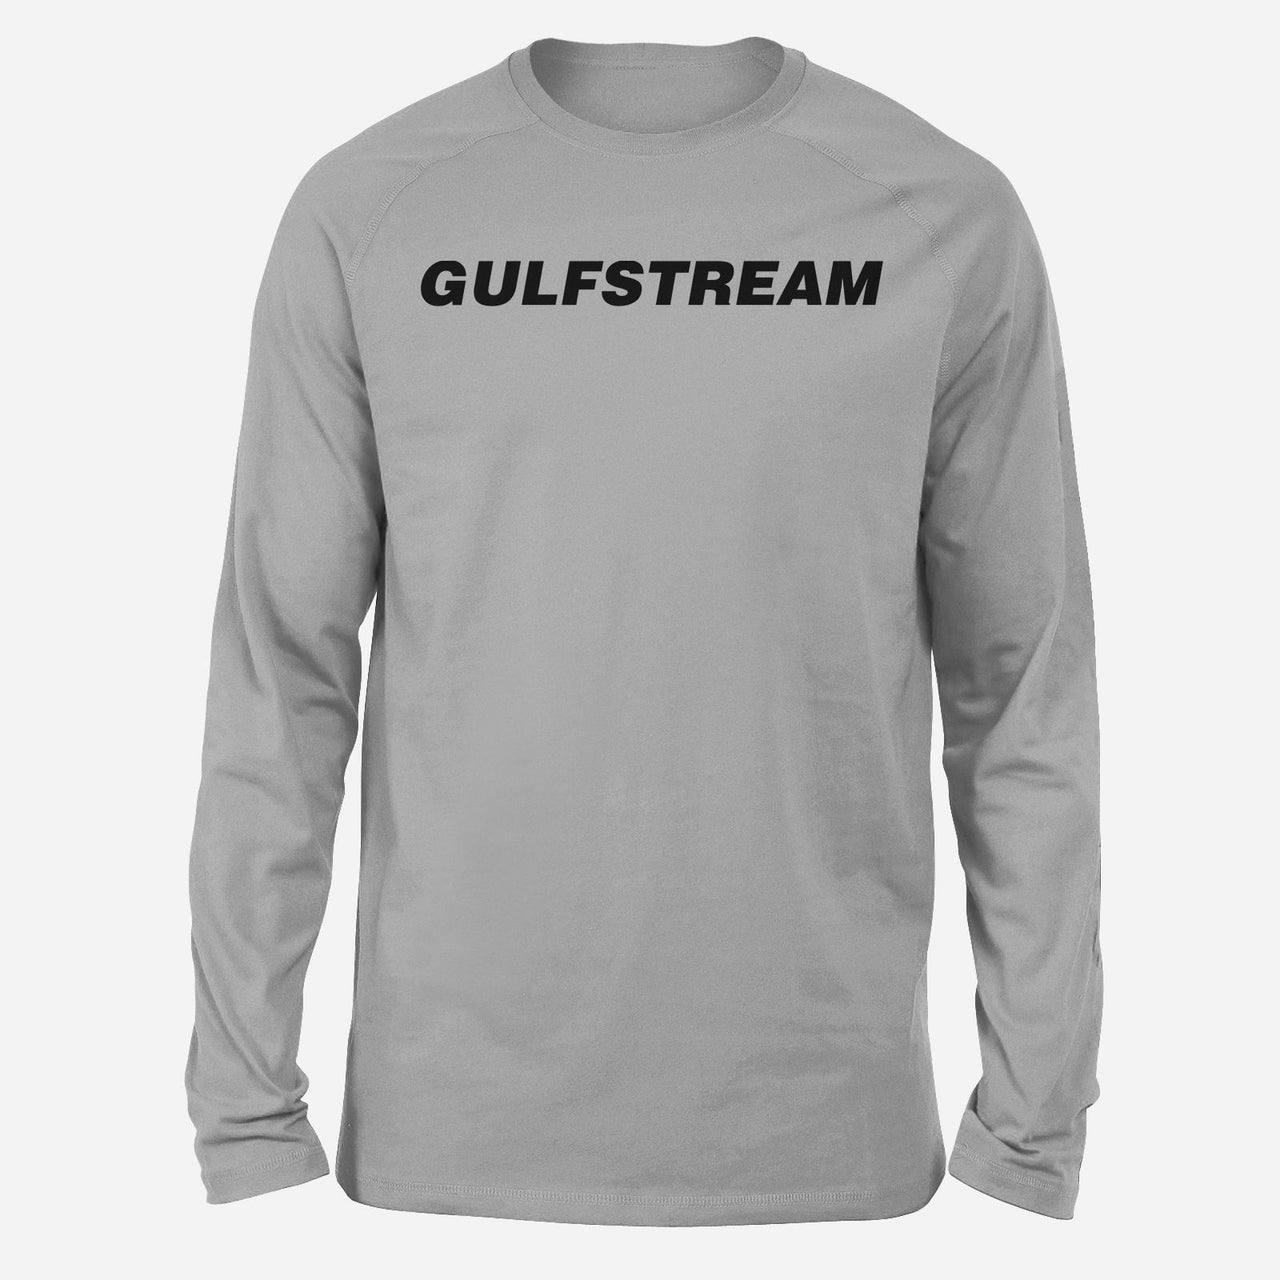 Gulfstream & Text Designed Long-Sleeve T-Shirts